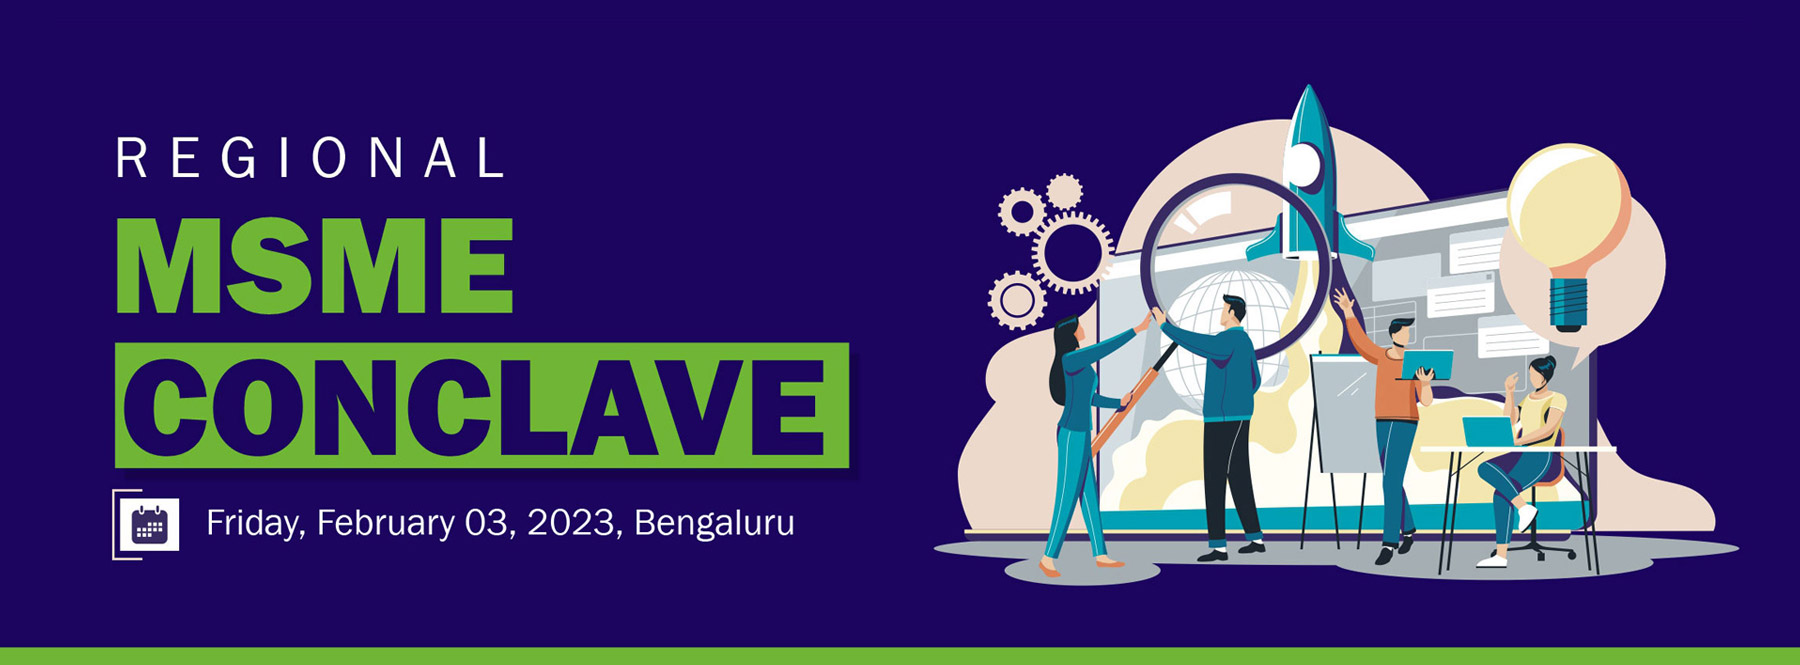 Regional MSME Conclave - IOD Bengaluru